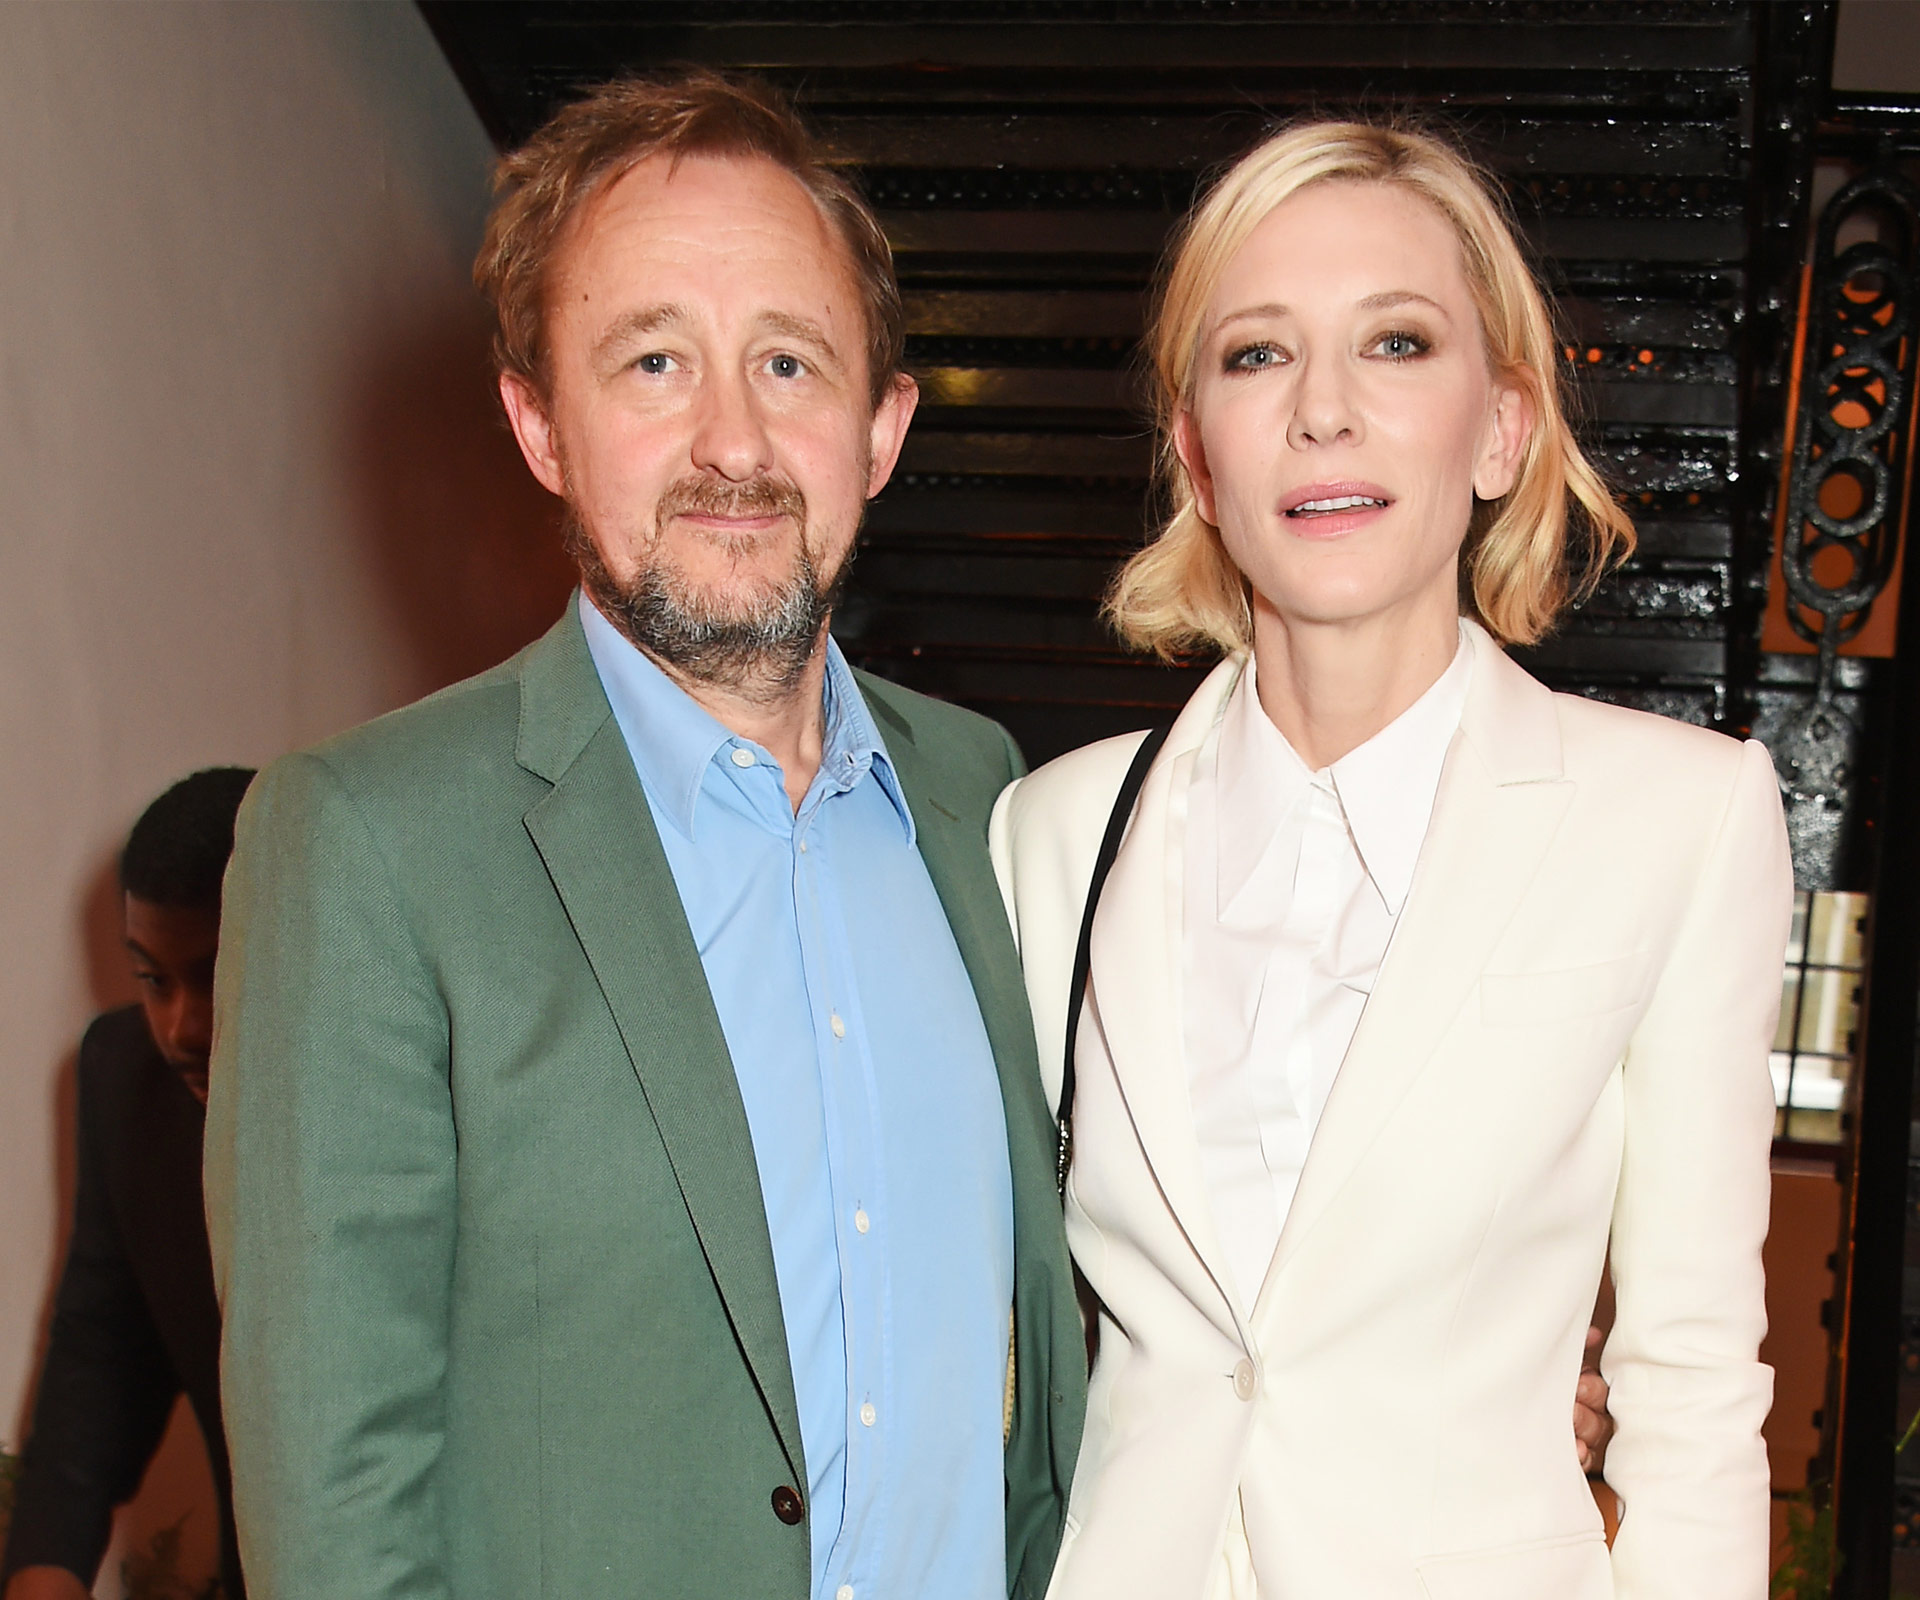 Andrew Upton and Cate Blanchett